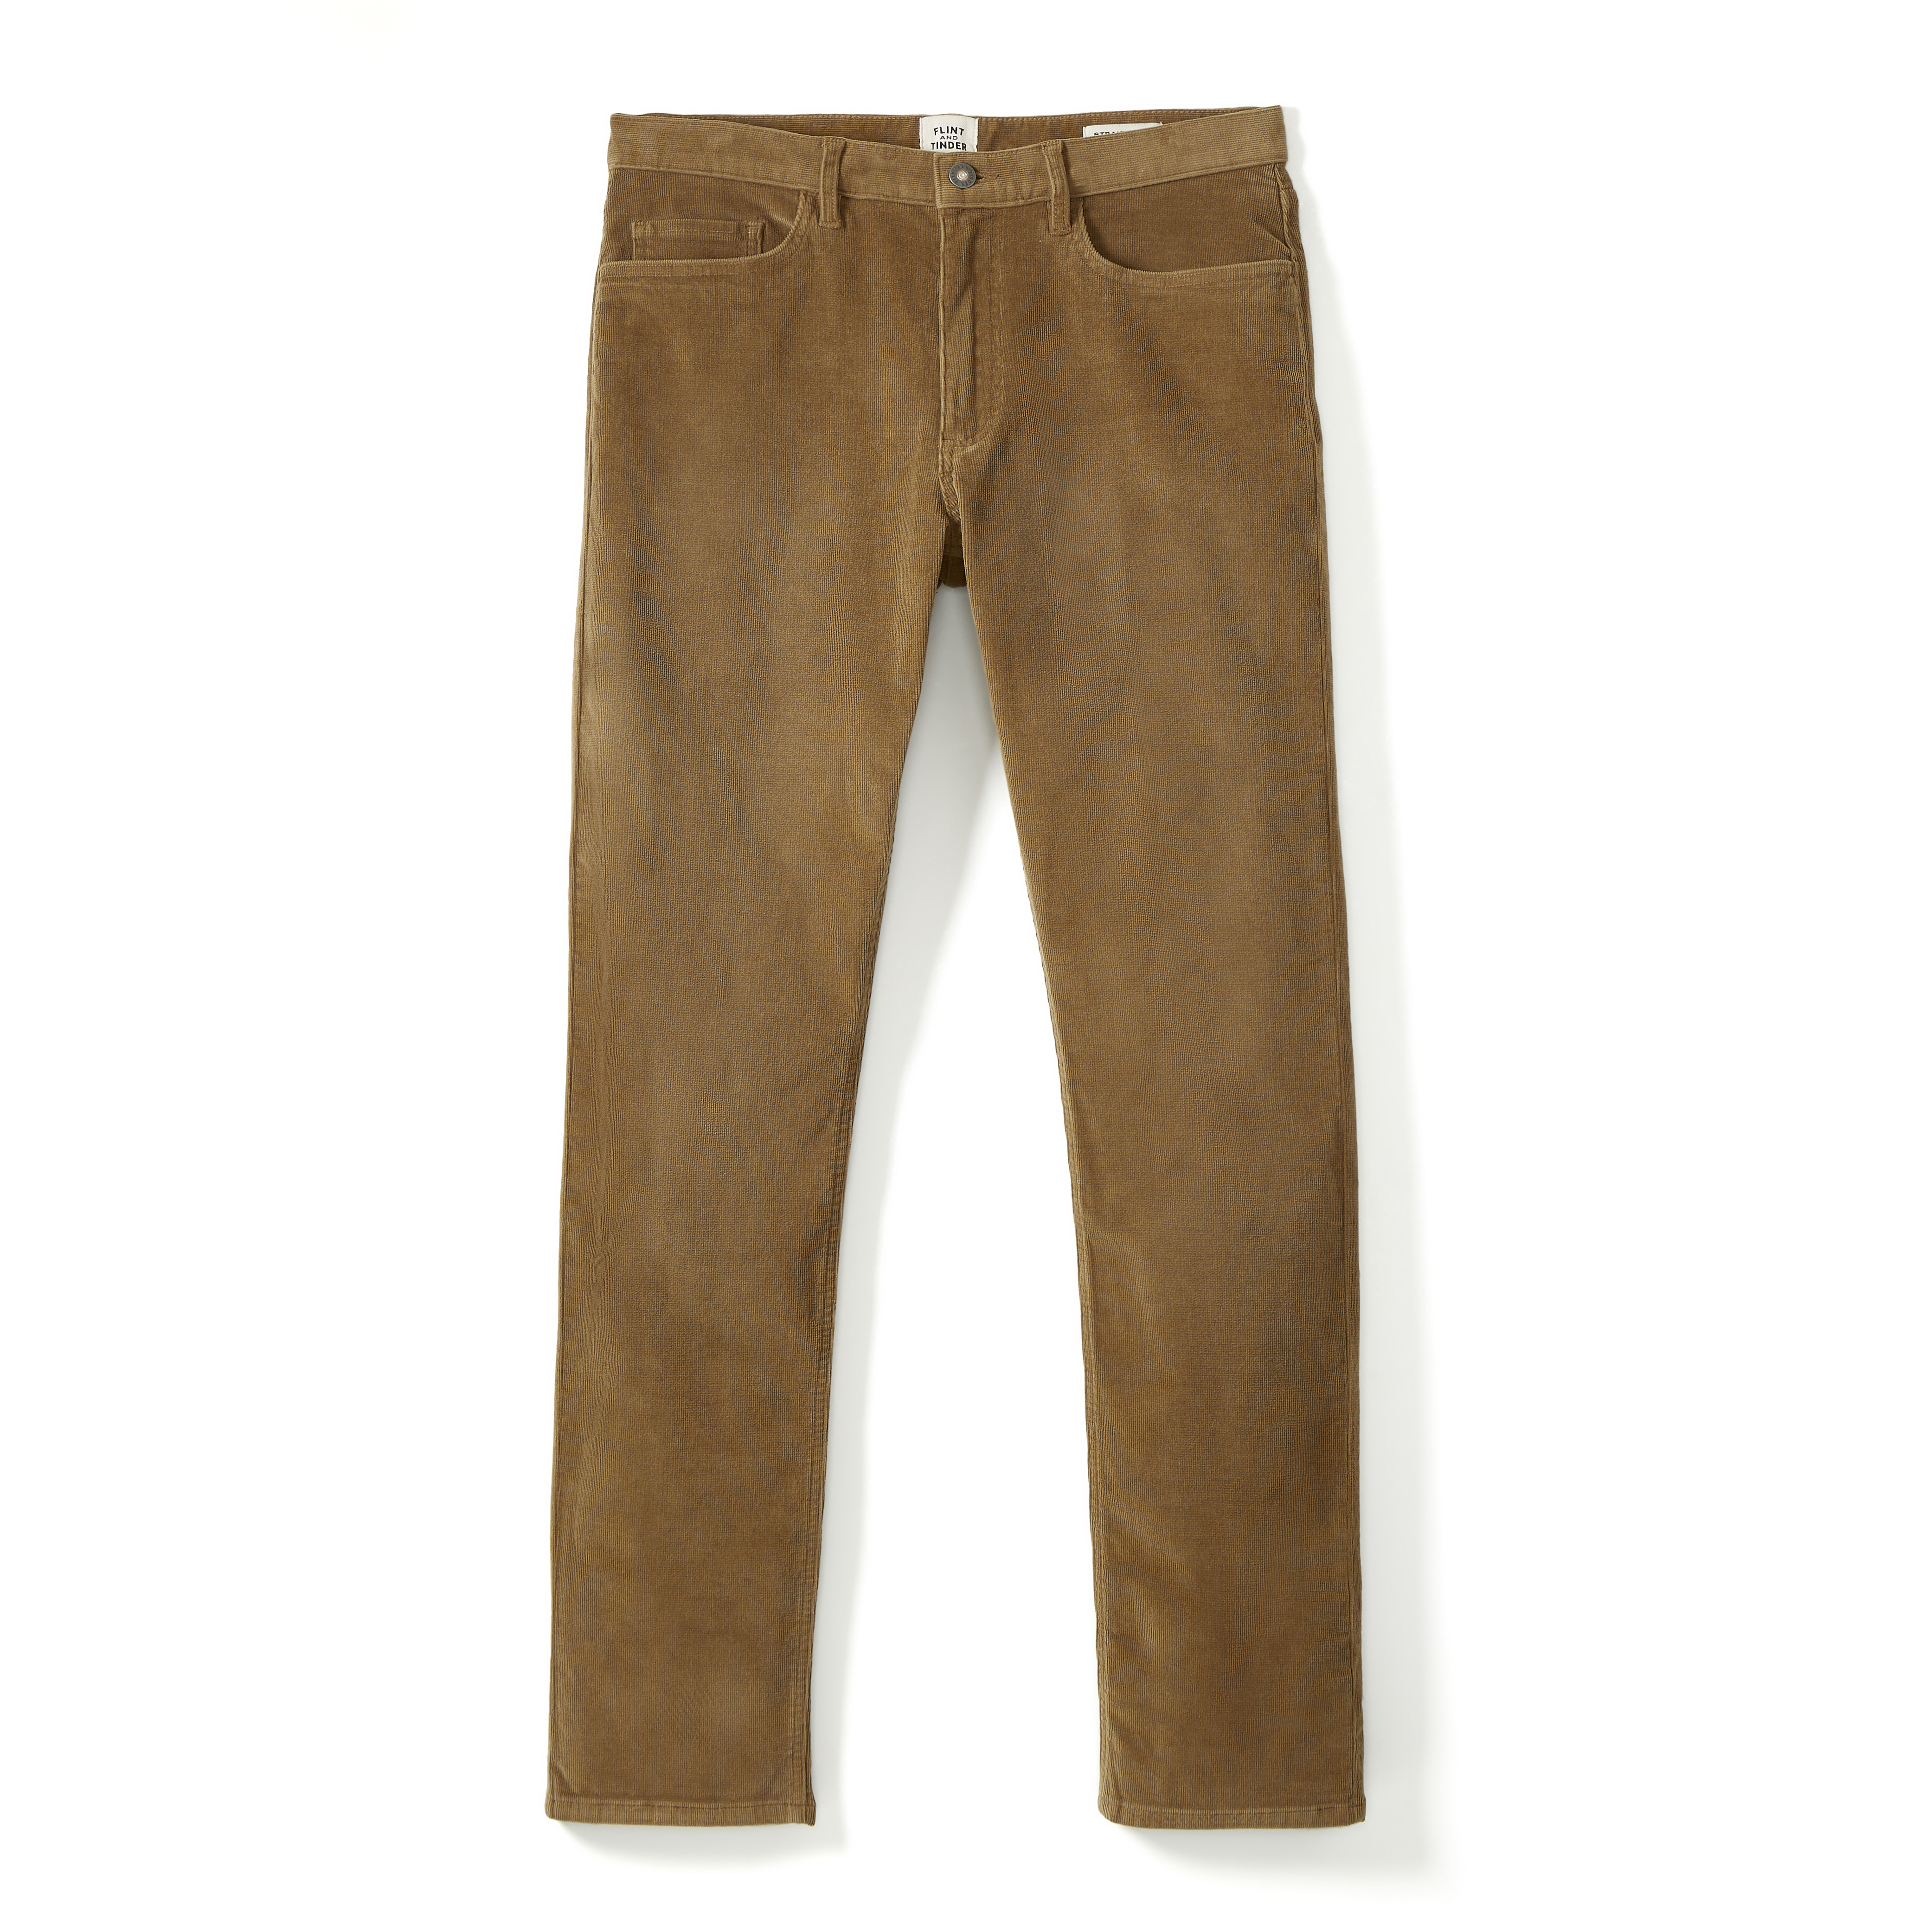 Buy Aeropostale Skinny Fit Corduroy Trousers - NNNOW.com